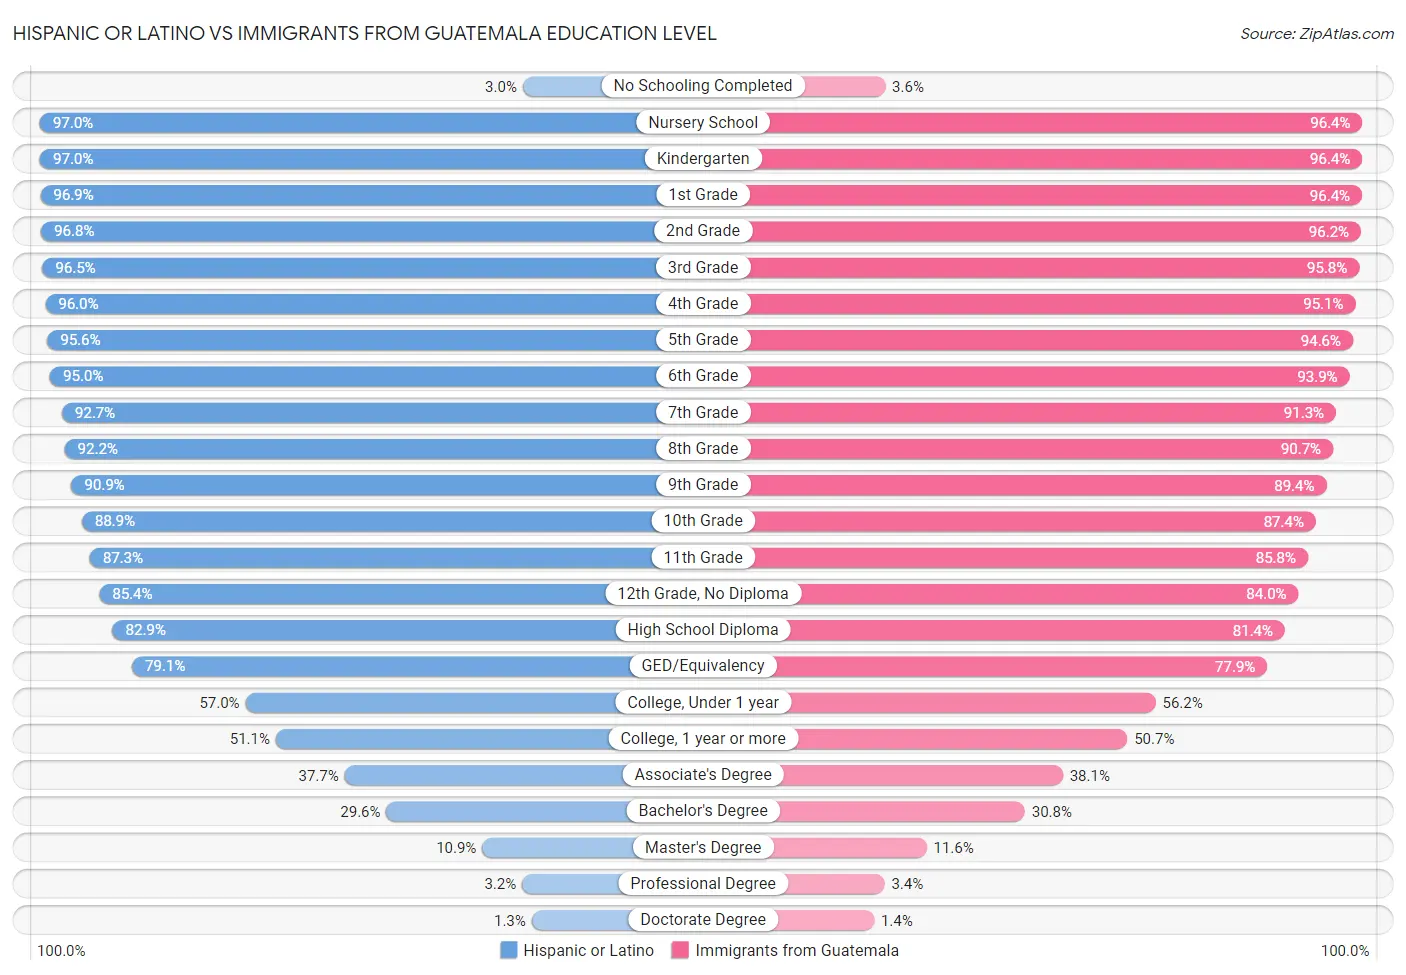 Hispanic or Latino vs Immigrants from Guatemala Education Level